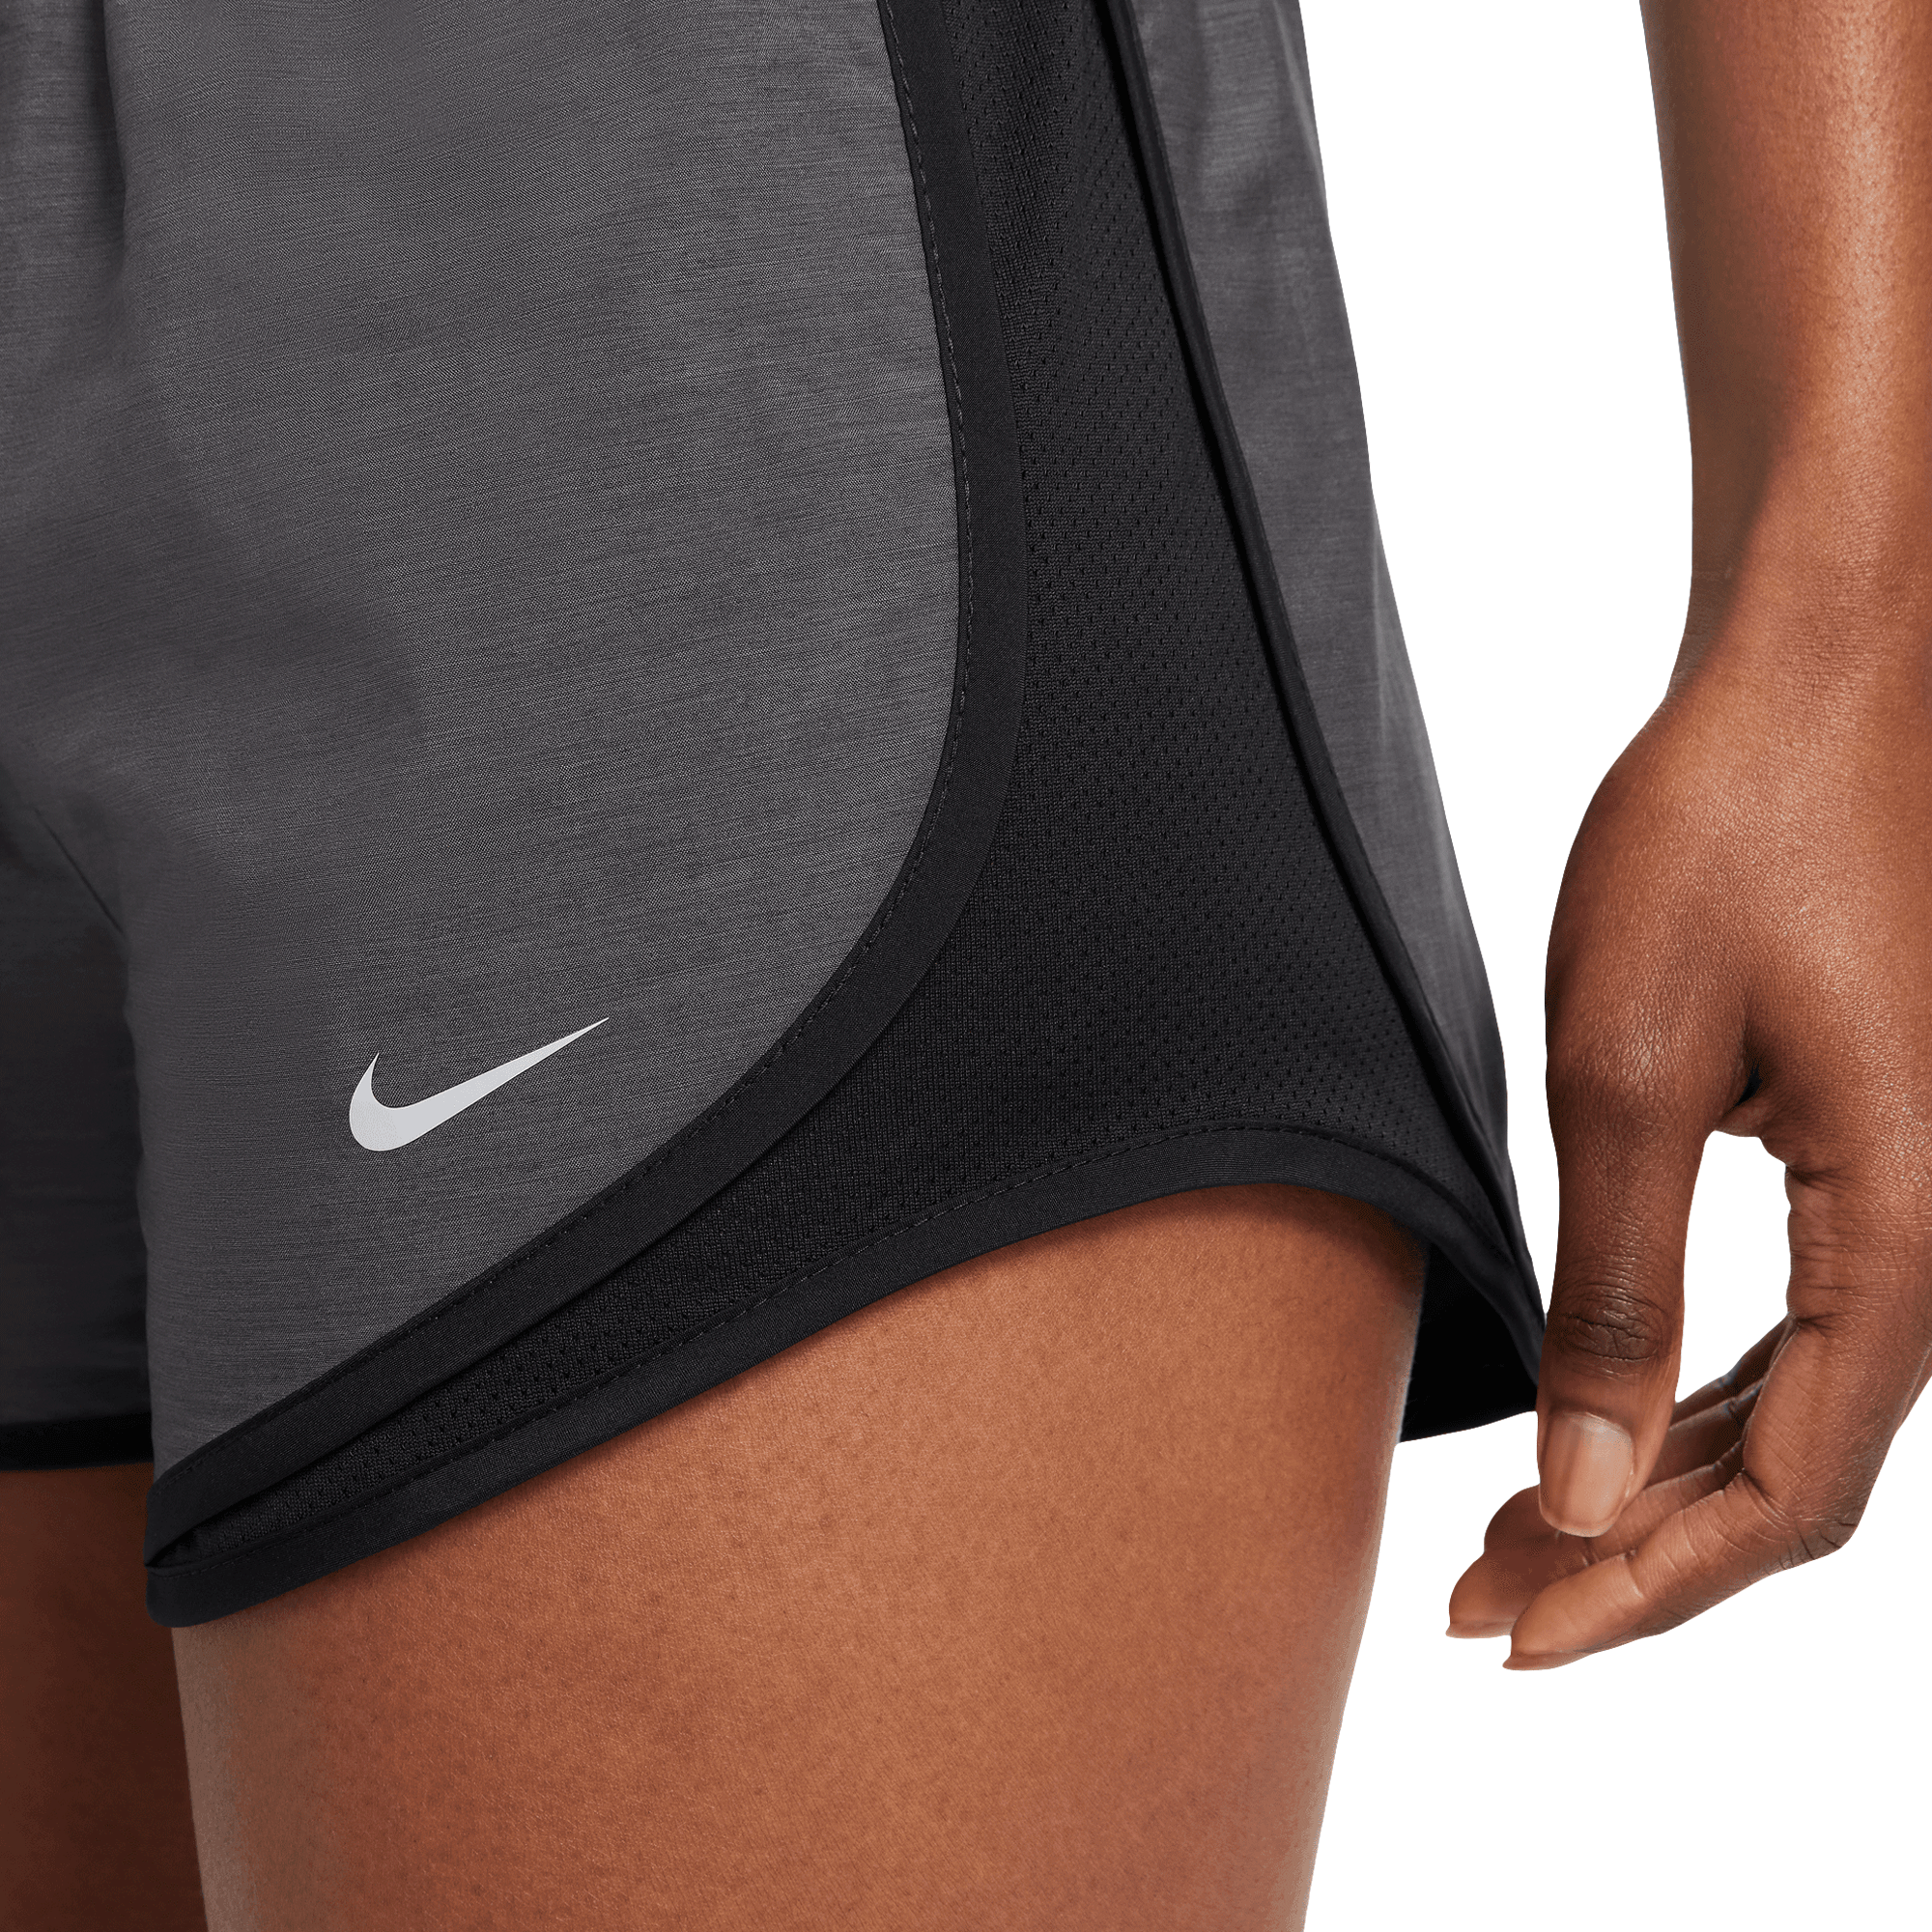 Short Nike Entrenamiento Pro 365 Mujer